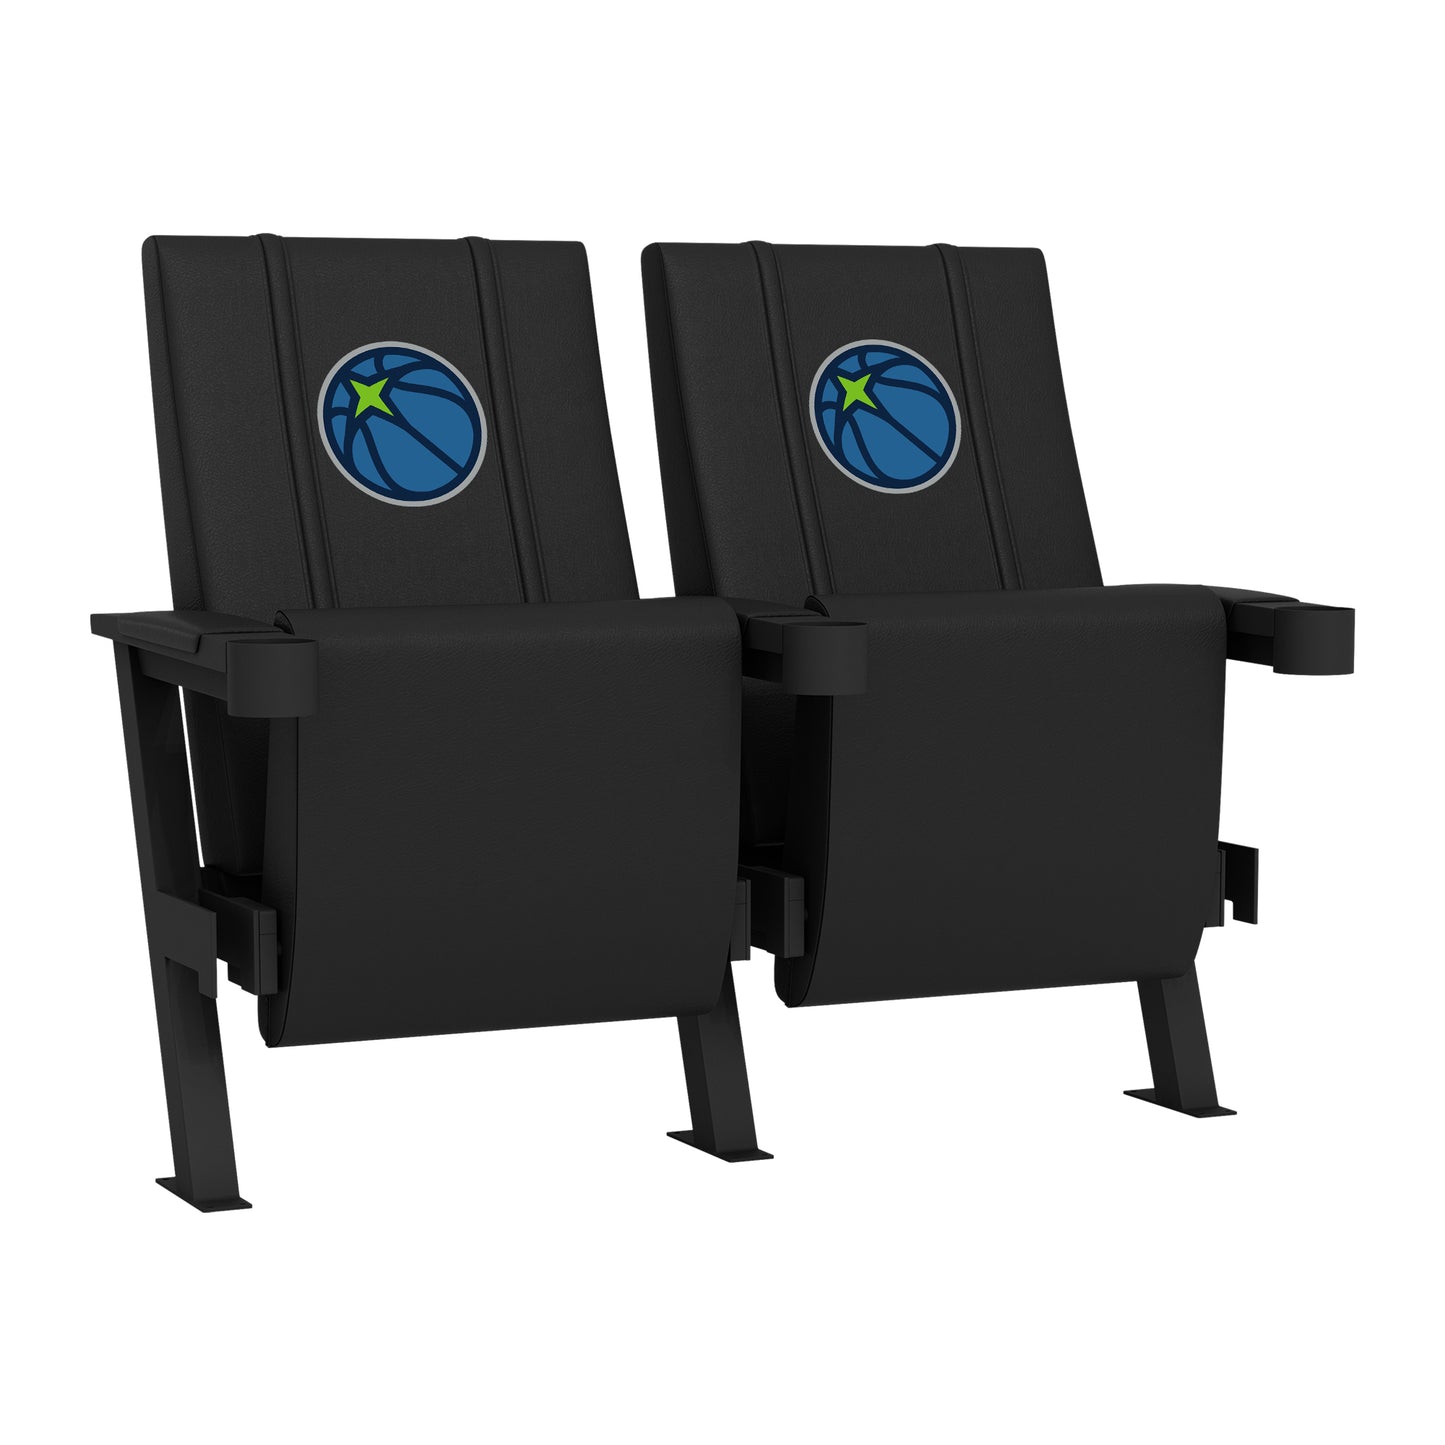 SuiteMax 3.5 VIP Seats with Minnesota Timberwolves Secondary Logo